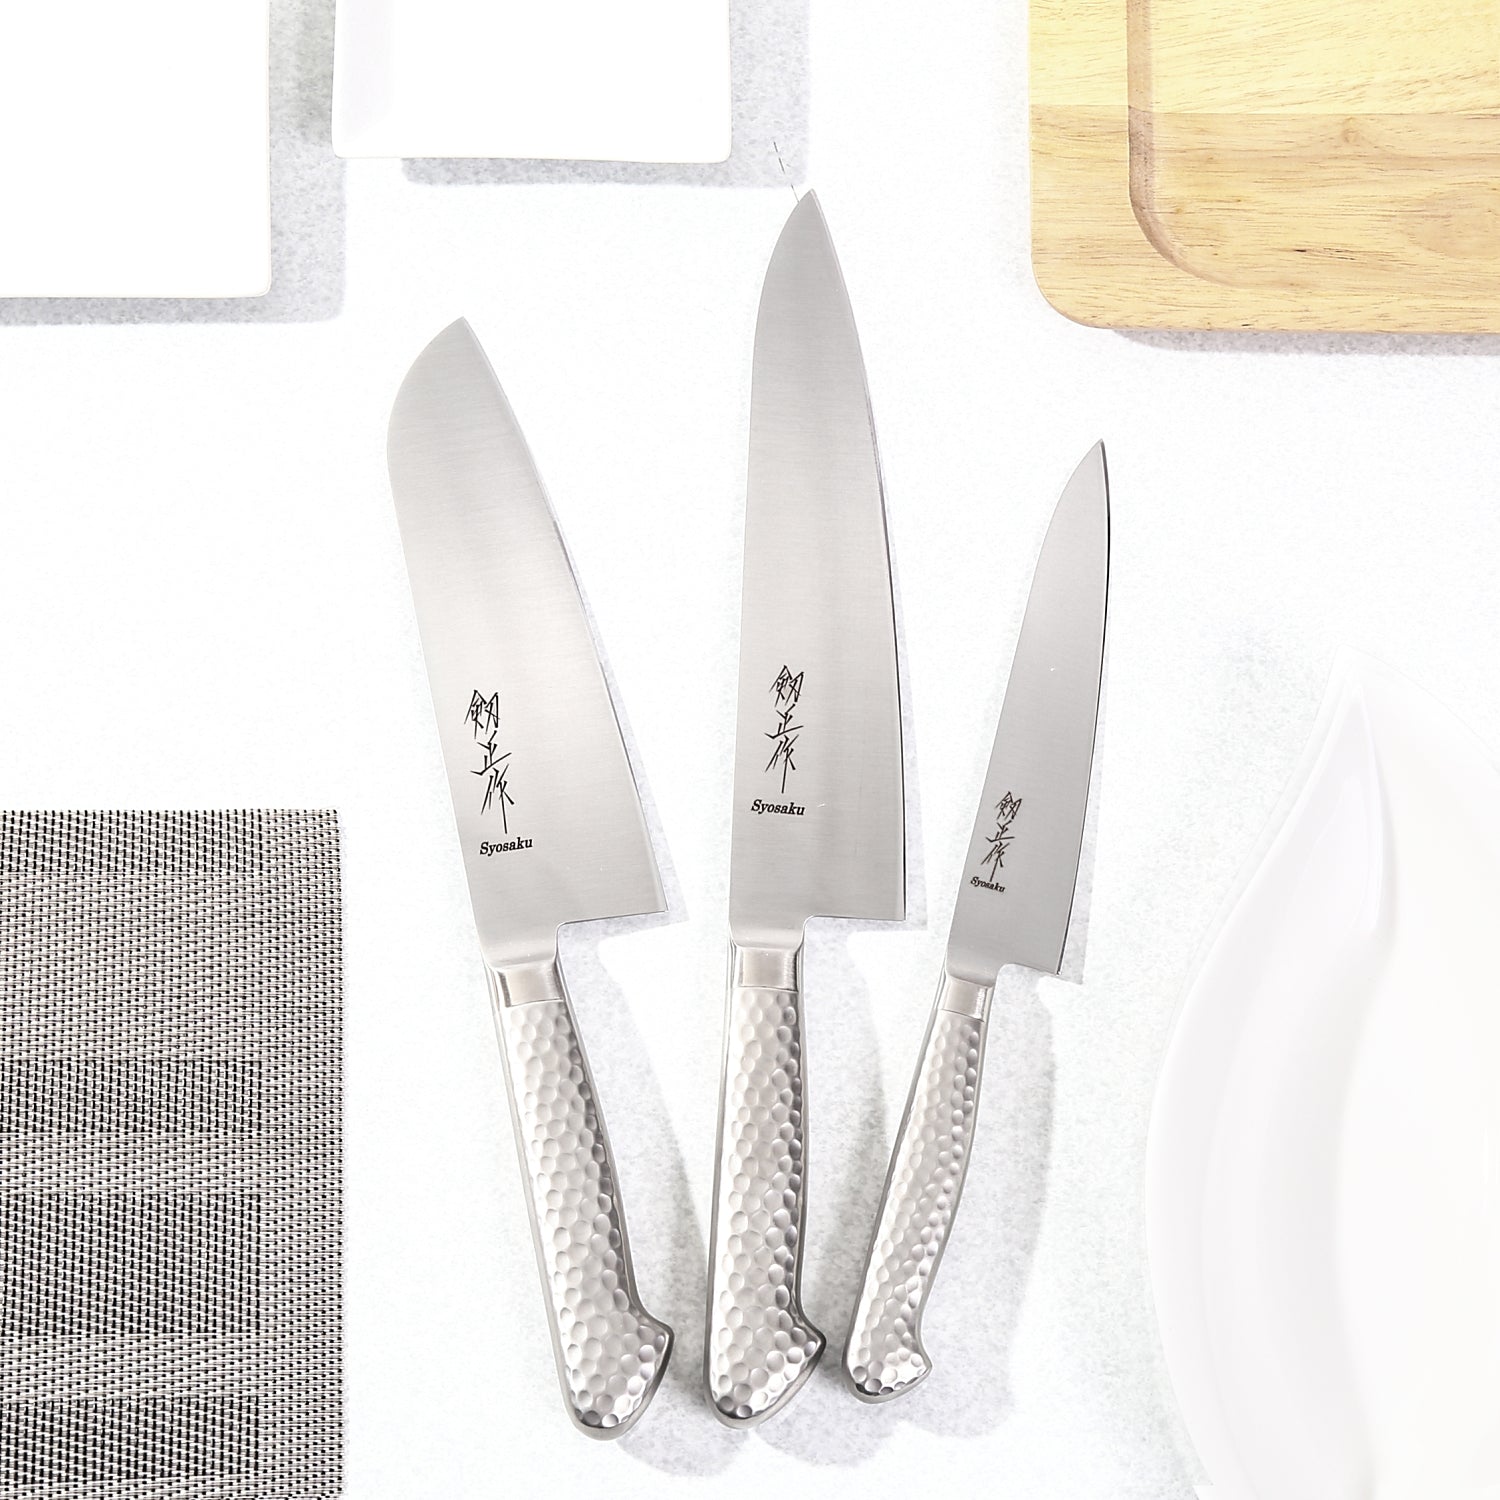 Syosaku Japanese Multi-Purpose Chef Knife INOX AUS-8A Stainless Steel Integrated Handle, Santoku 7-inch (180mm)